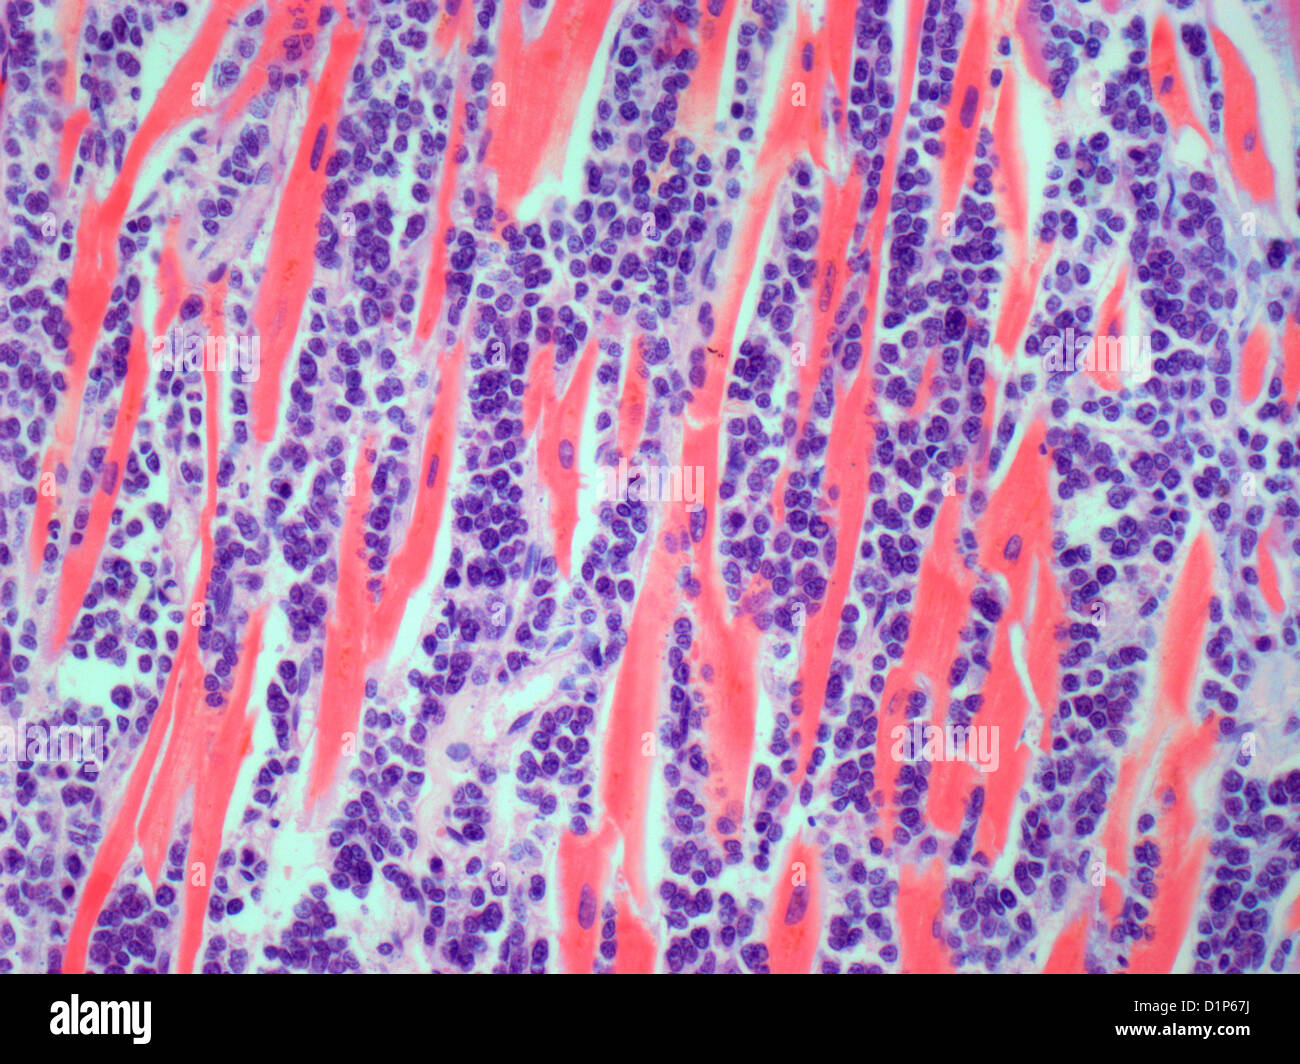 Secondary heart cancer, light micrograph Stock Photo